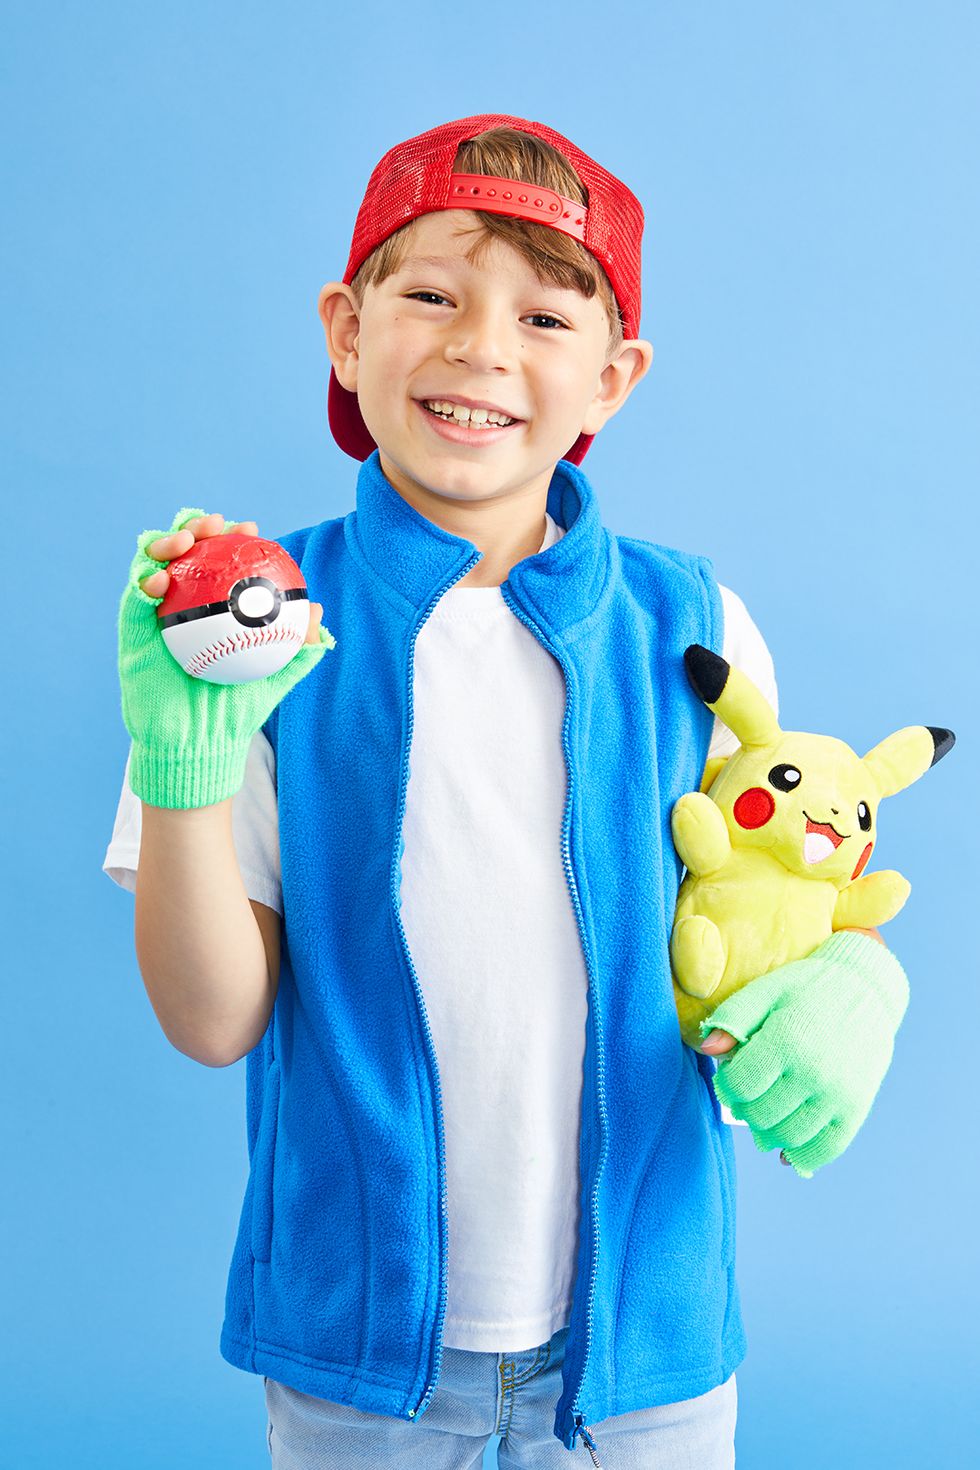 DIY Pokemon Ash Costume - Keeping it Simple